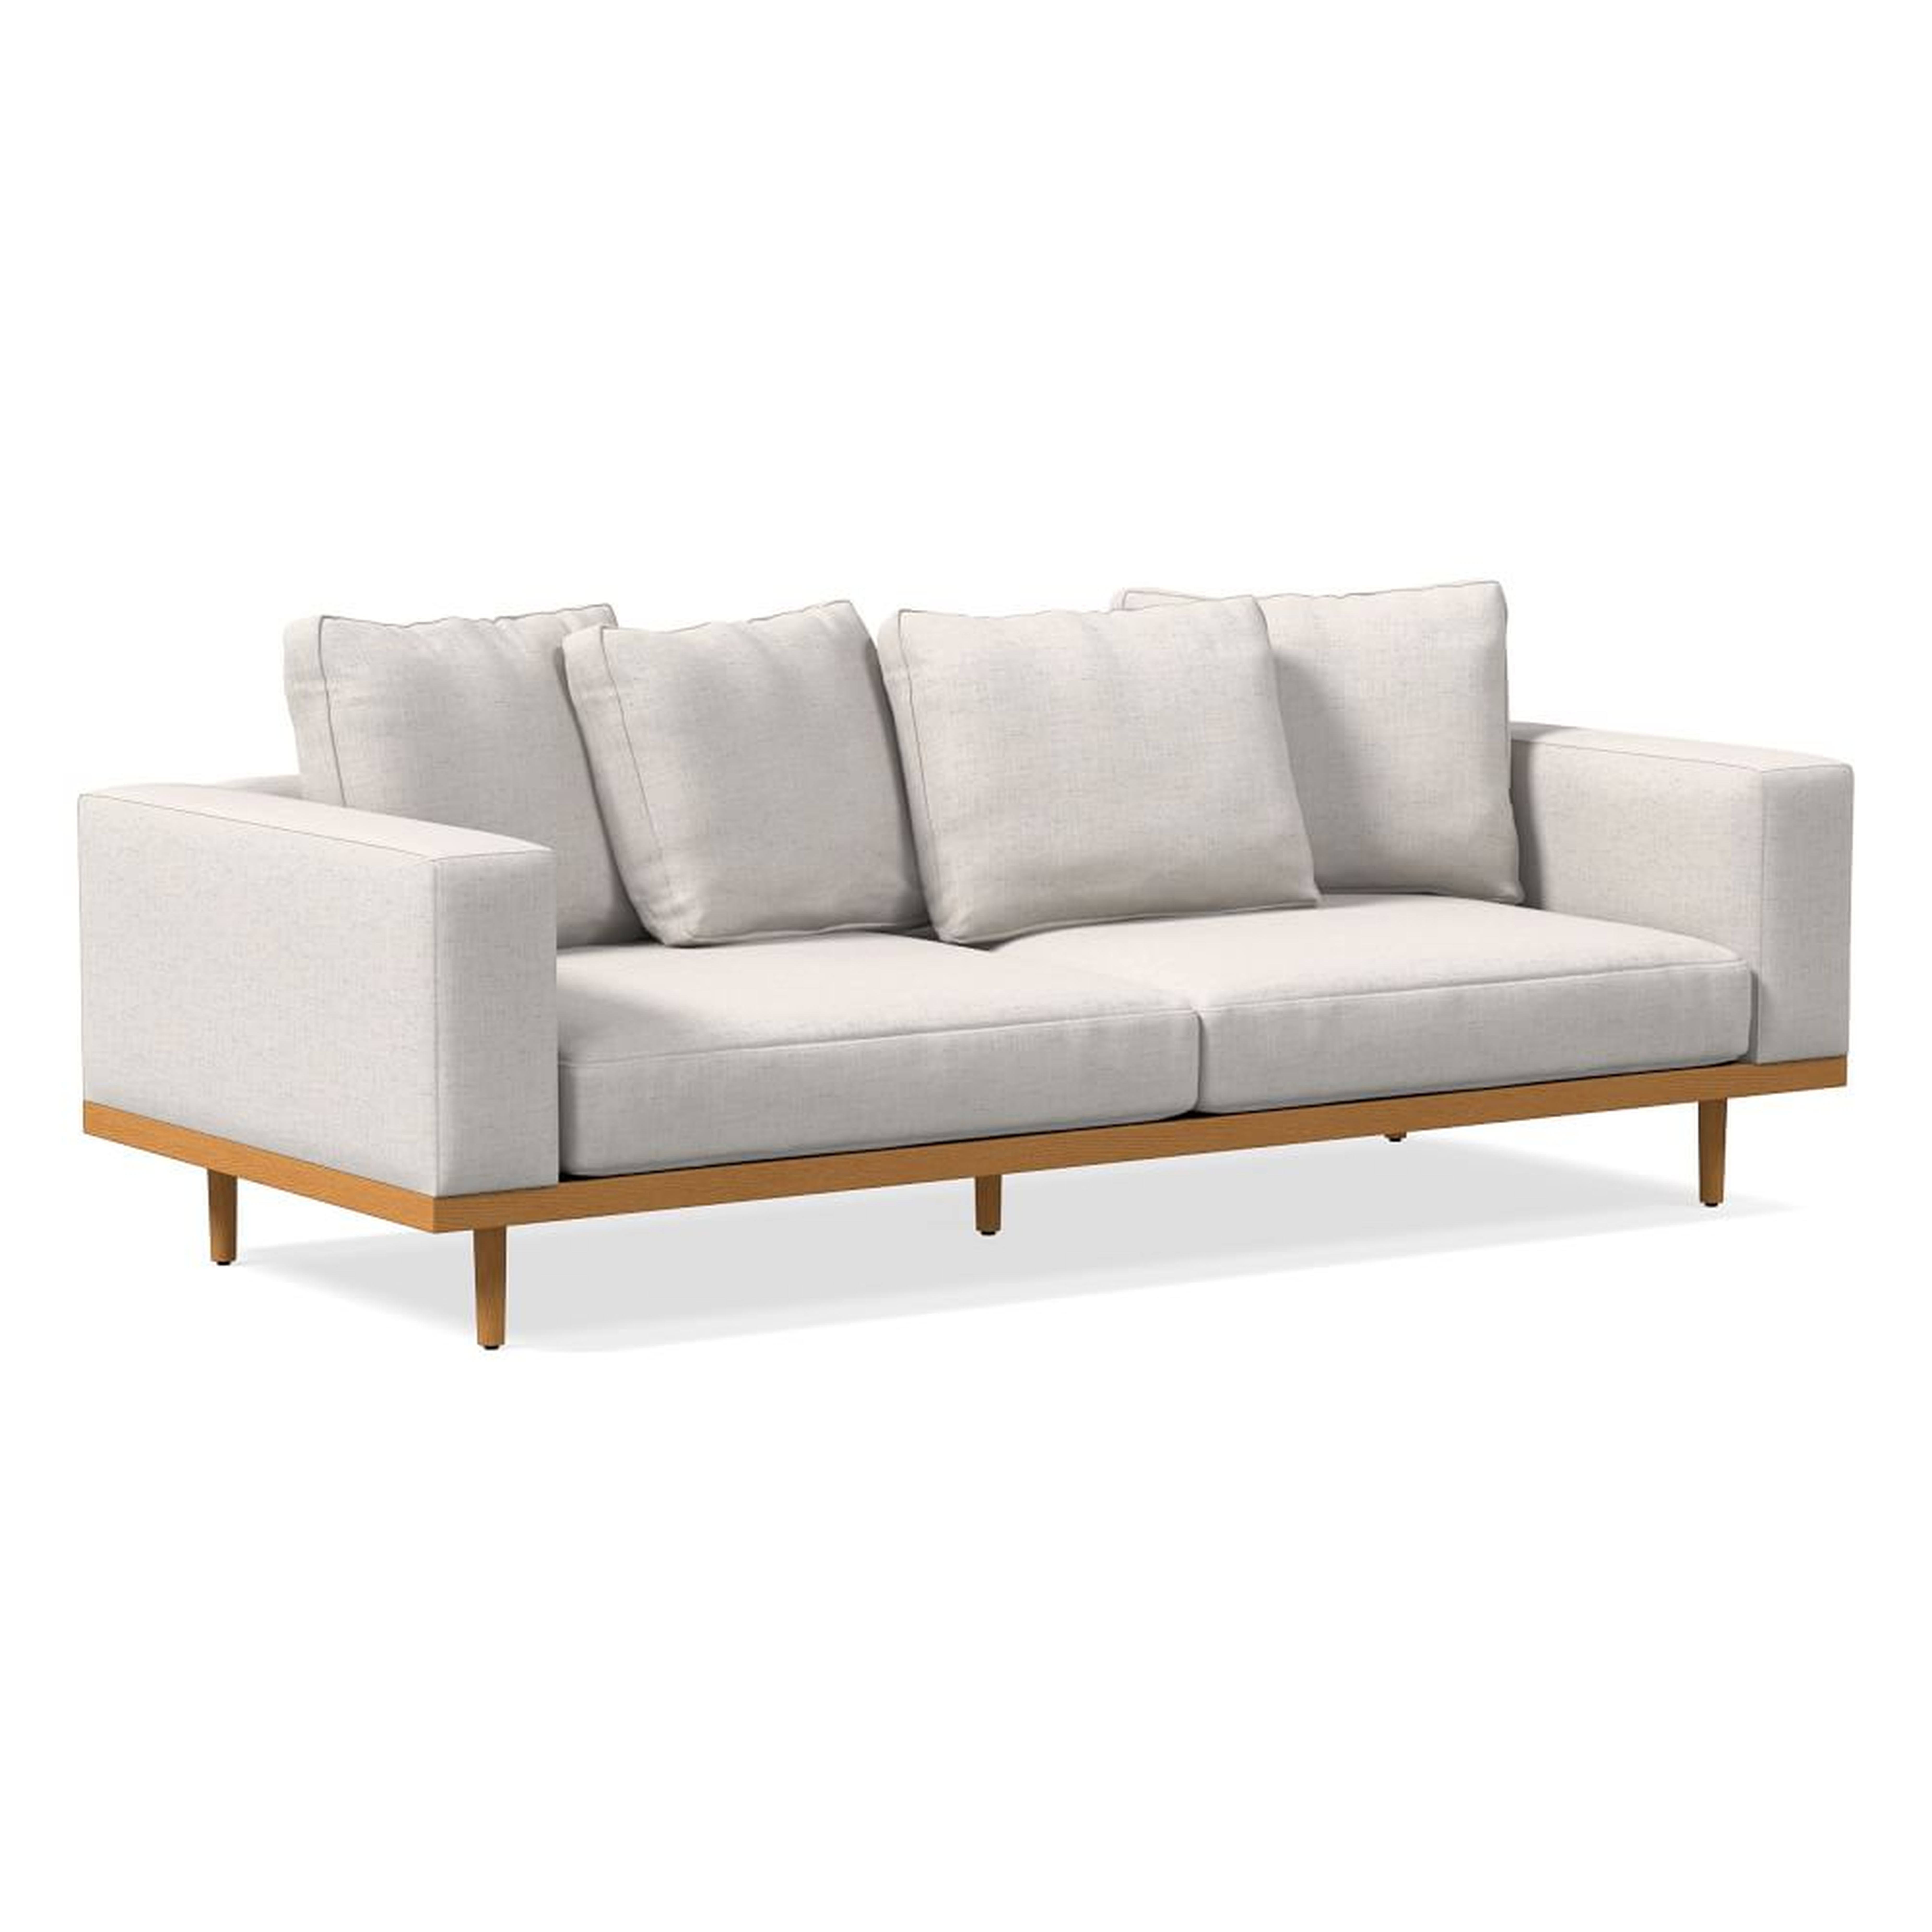 Newport 94" Toss-Back Cushion Sofa, Performance Coastal Linen, White, Almond - West Elm